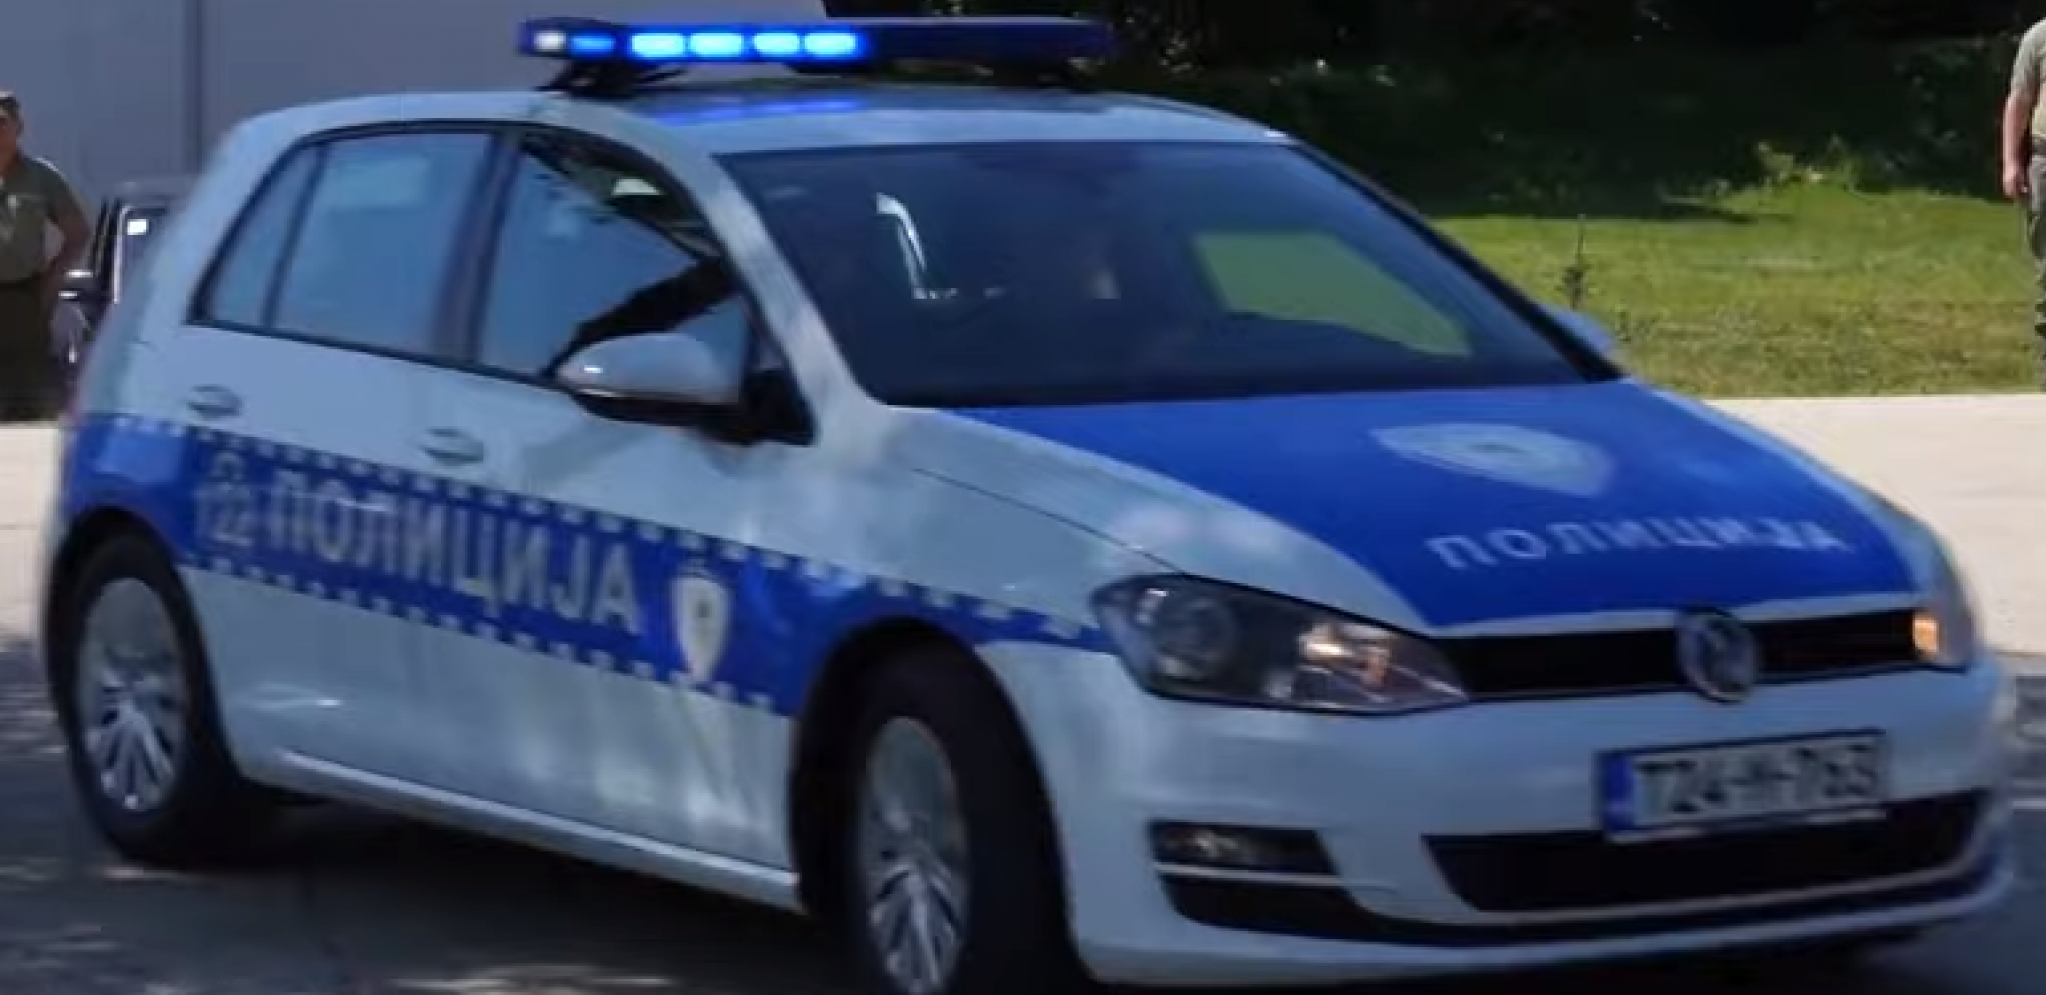 ZAPLENJENO 28 KILOGRAMA NARKOTIKA Uhapšena kriminalna grupa u Nišu